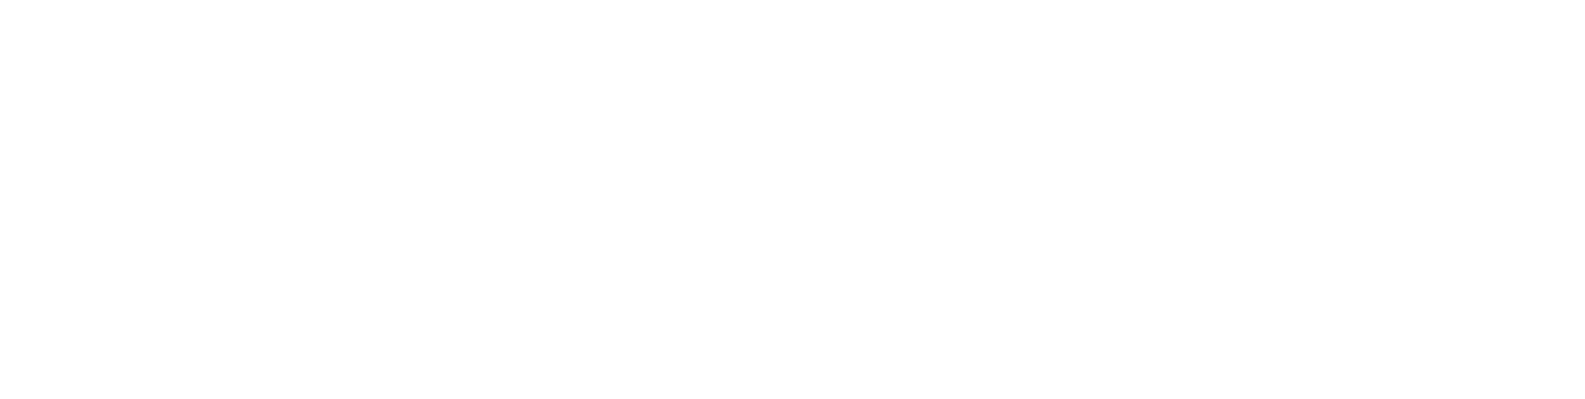 Bank of Jiangsu logo grand pour les fonds sombres (PNG transparent)